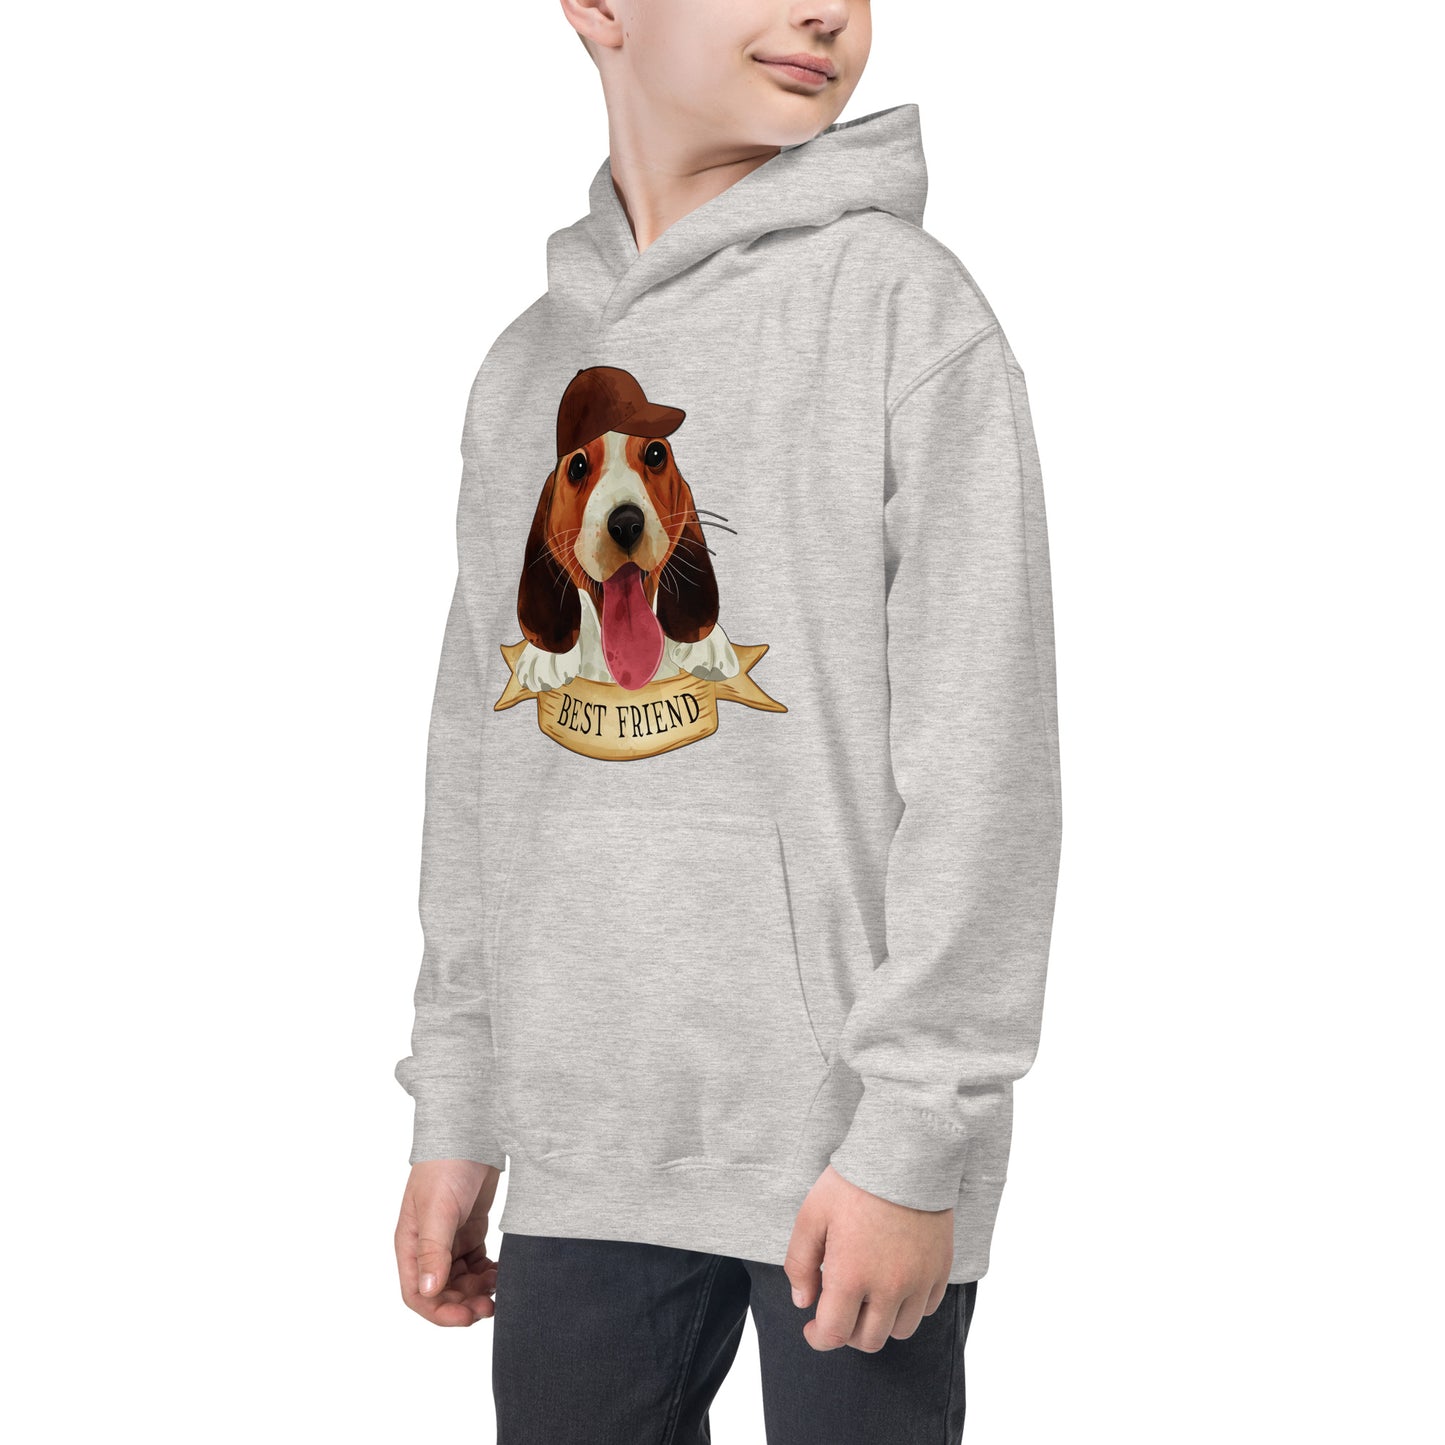 Cute Beagle Dog Hoodie, No. 0279